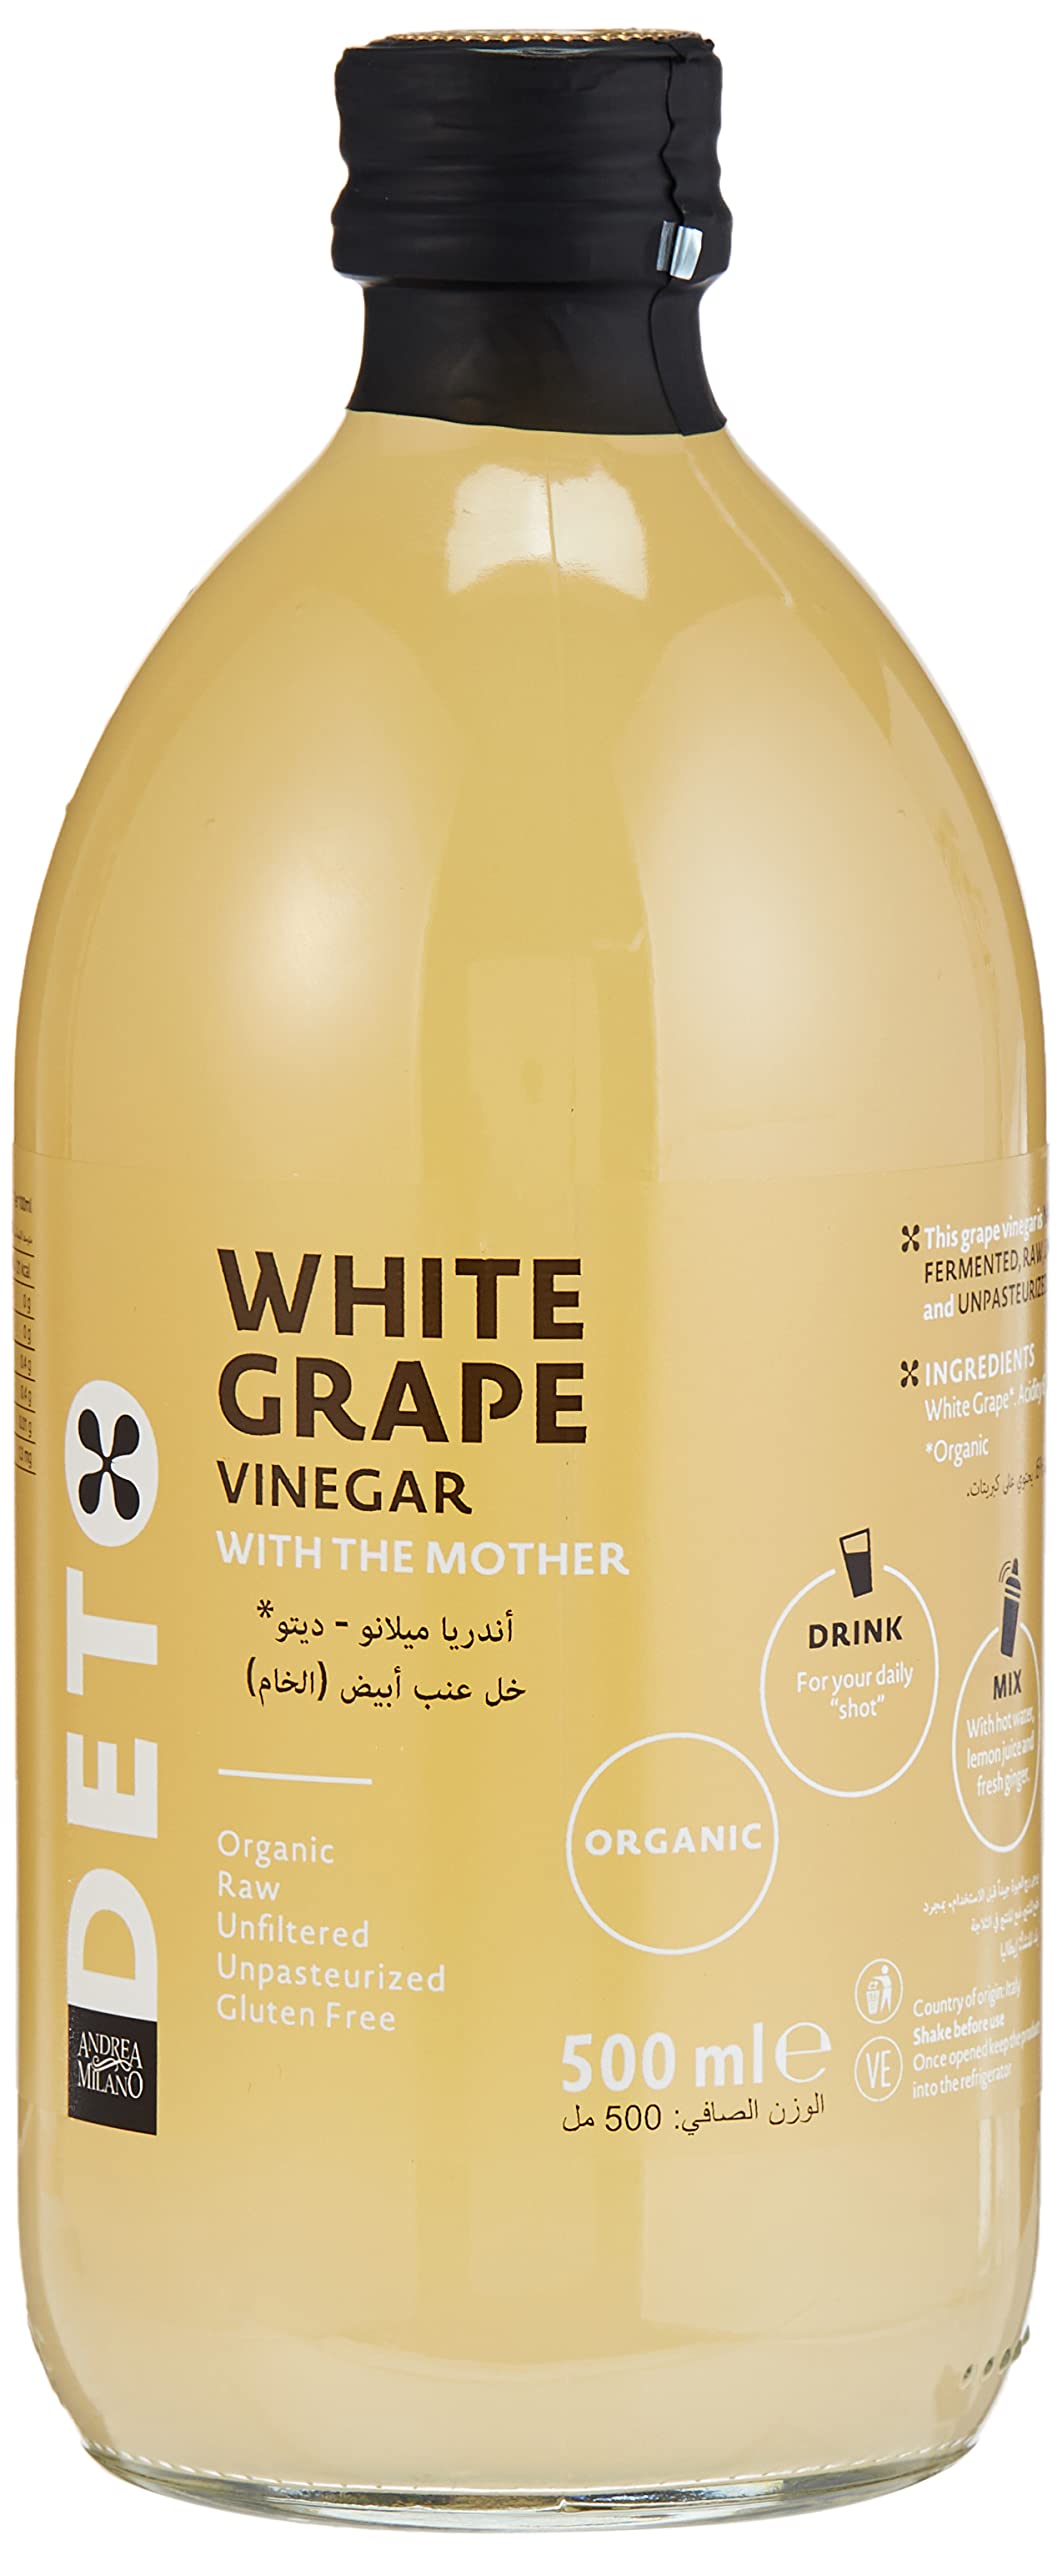 ORGANIC LARDER White Grape Vinegar, 500ml - Organic, Vegan, Natural